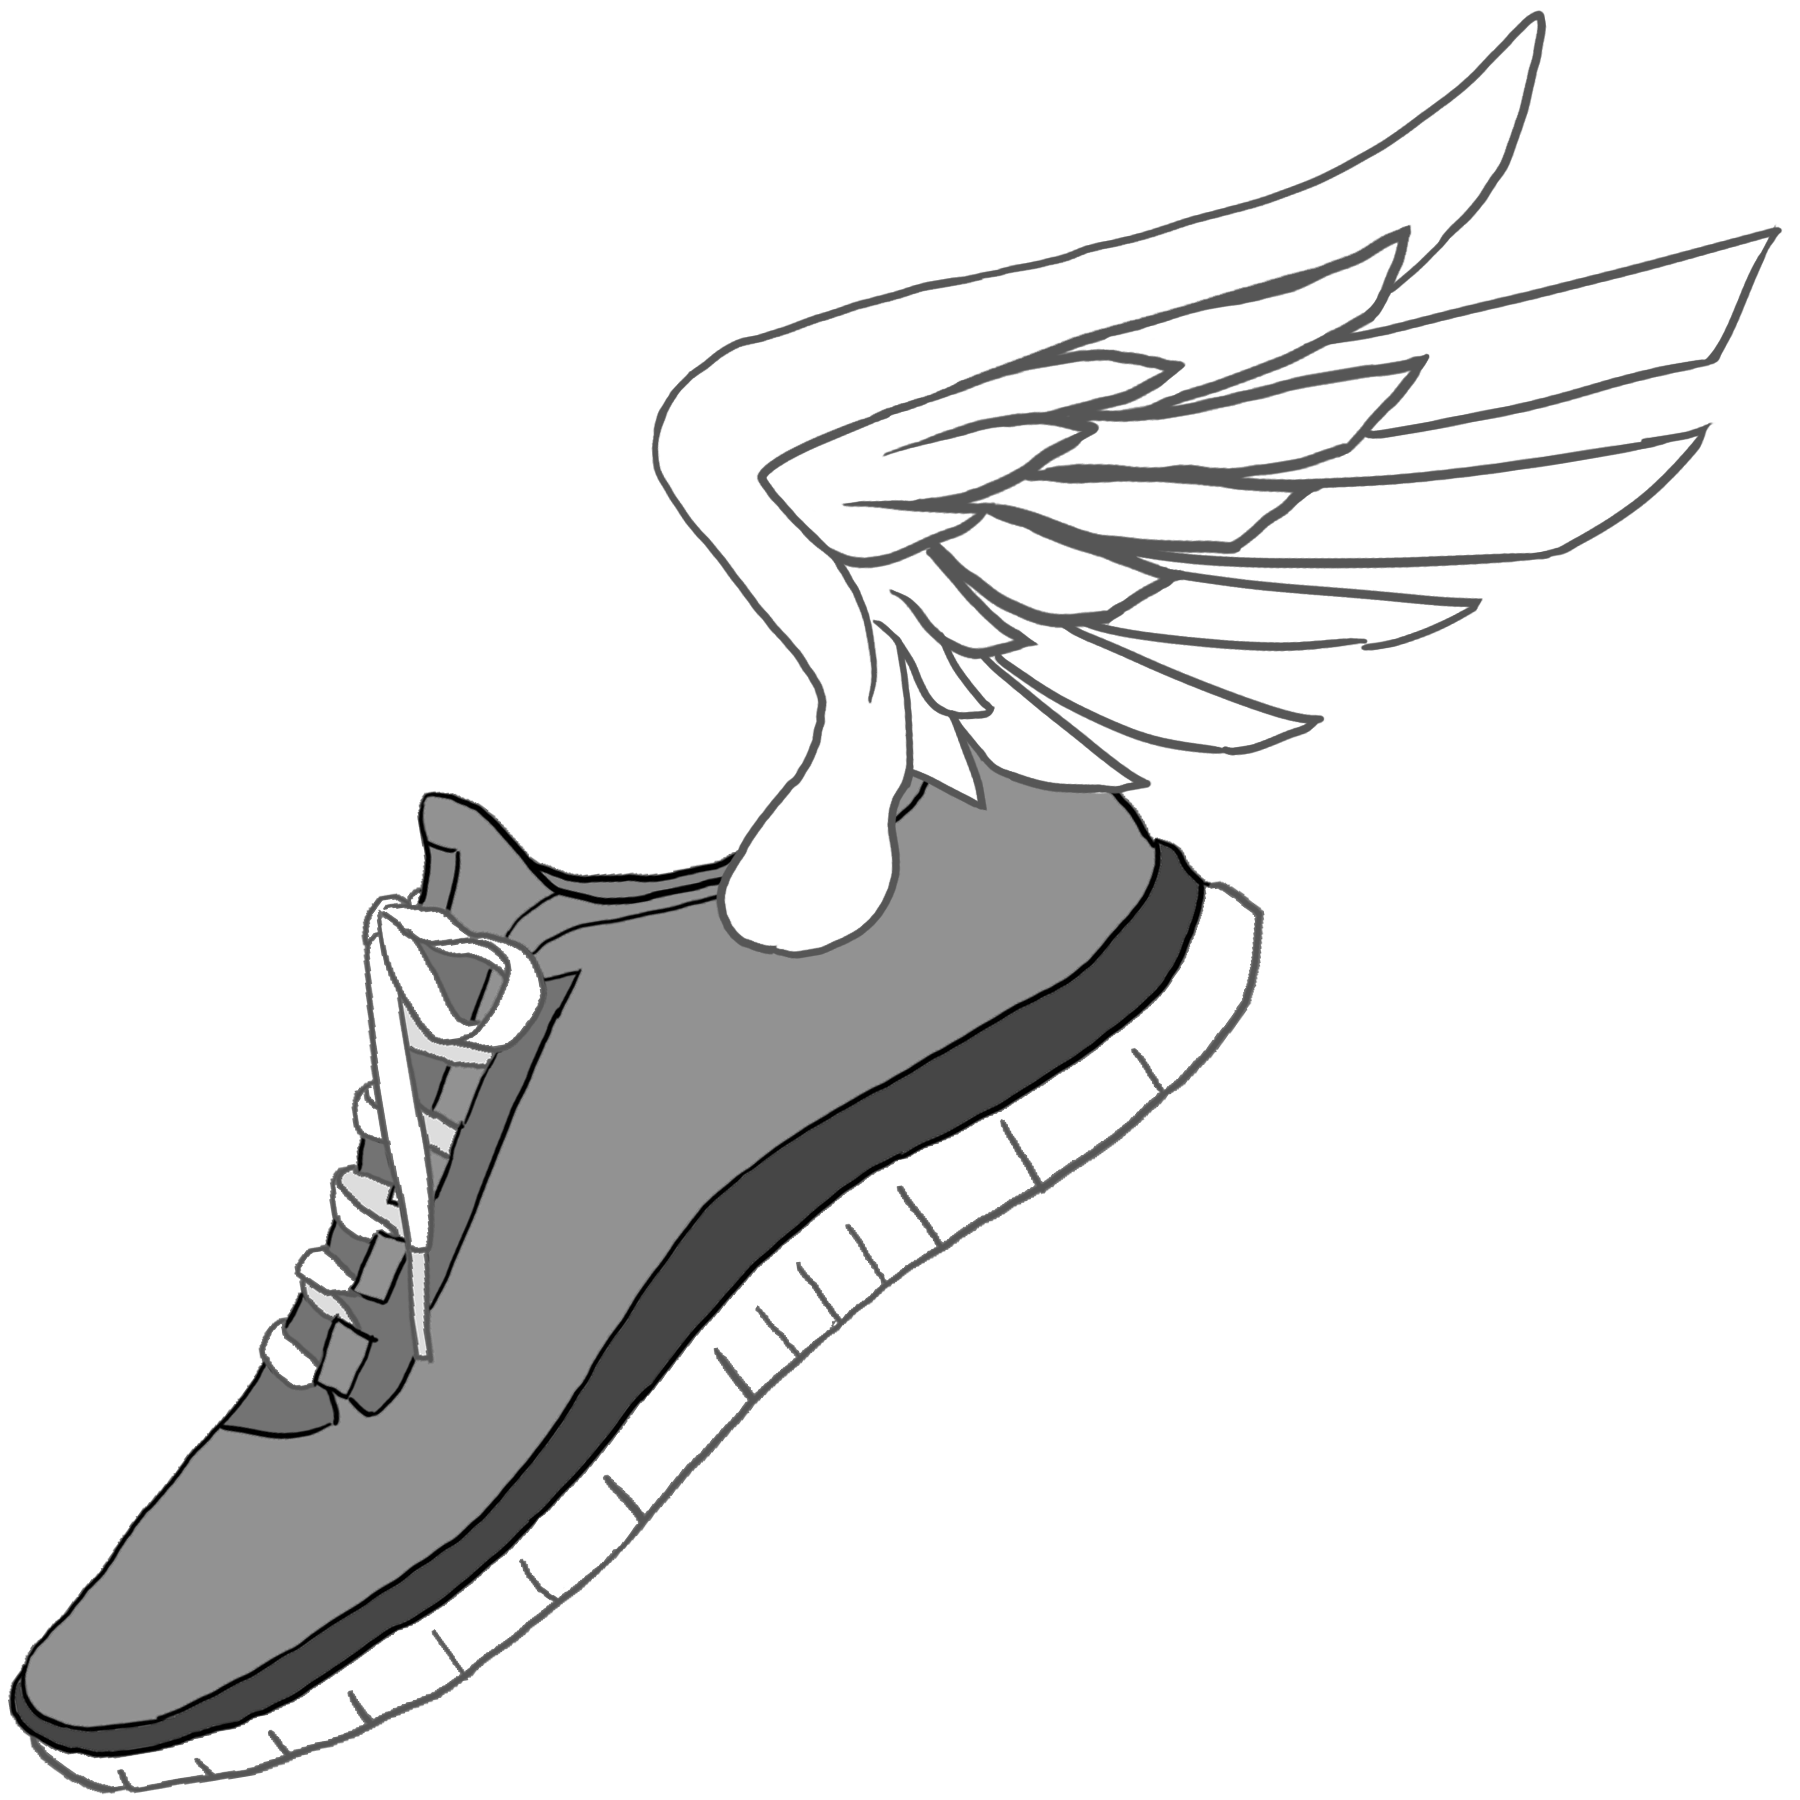 Tennis Shoe with Wings Logo - Free Cartoon Running Shoes, Download Free Clip Art, Free Clip Art